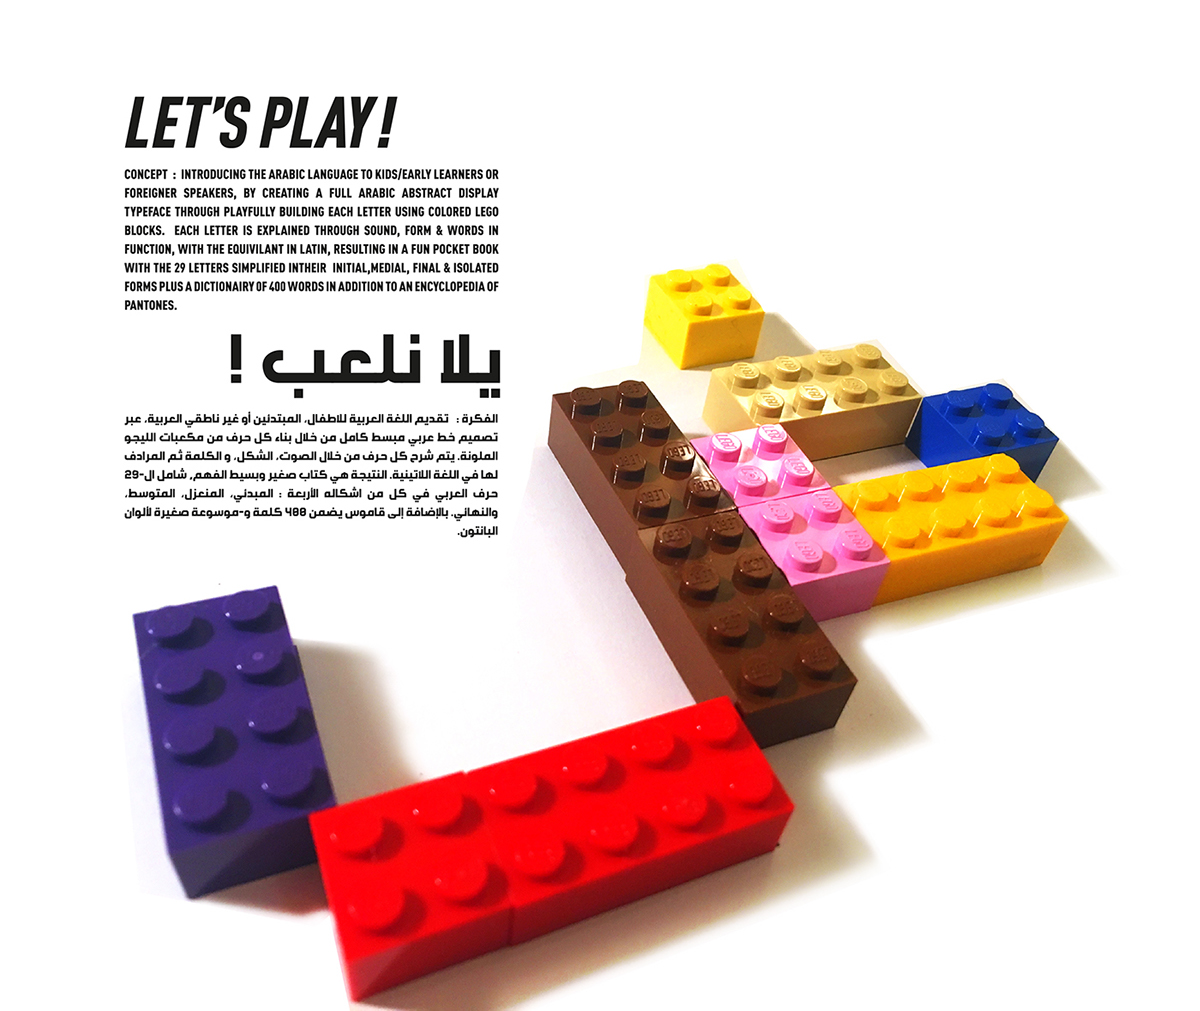 Arabictypography LEGO communication language arabic cairo dictionary easy learning colors Playful blocks latin & arabic bilingual Pantones